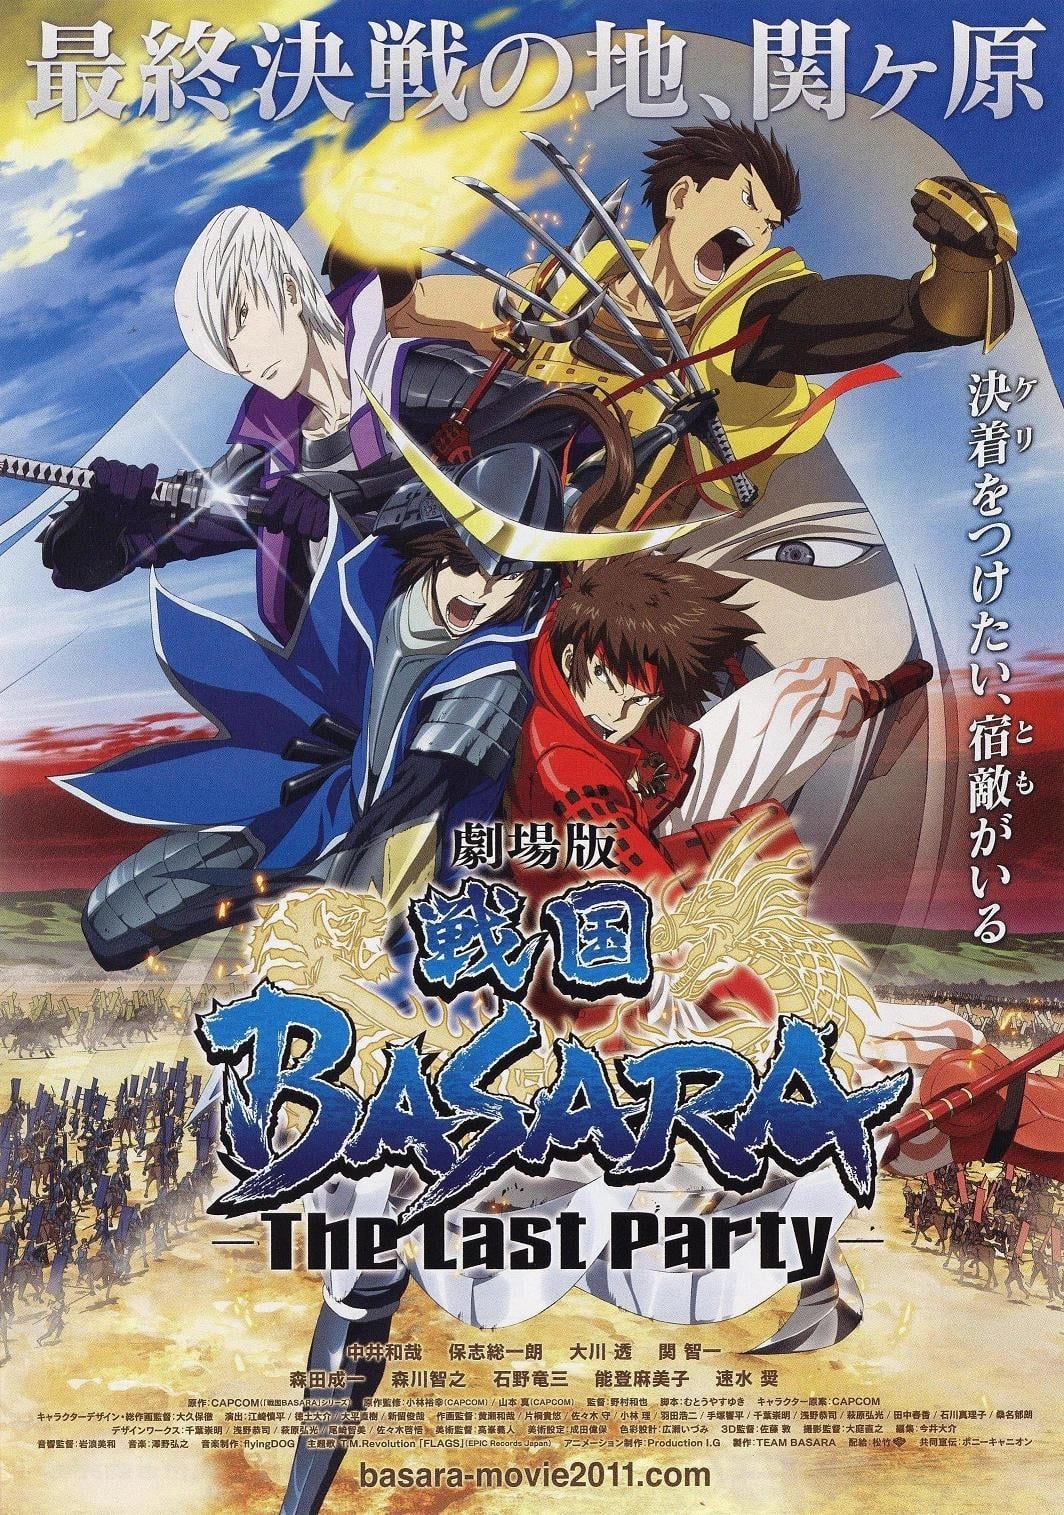 Chiến Quốc Basara: Bữa Tiệc Cuối Cùng (Gekijouban Sengoku Basara: The Last Party) [2011]